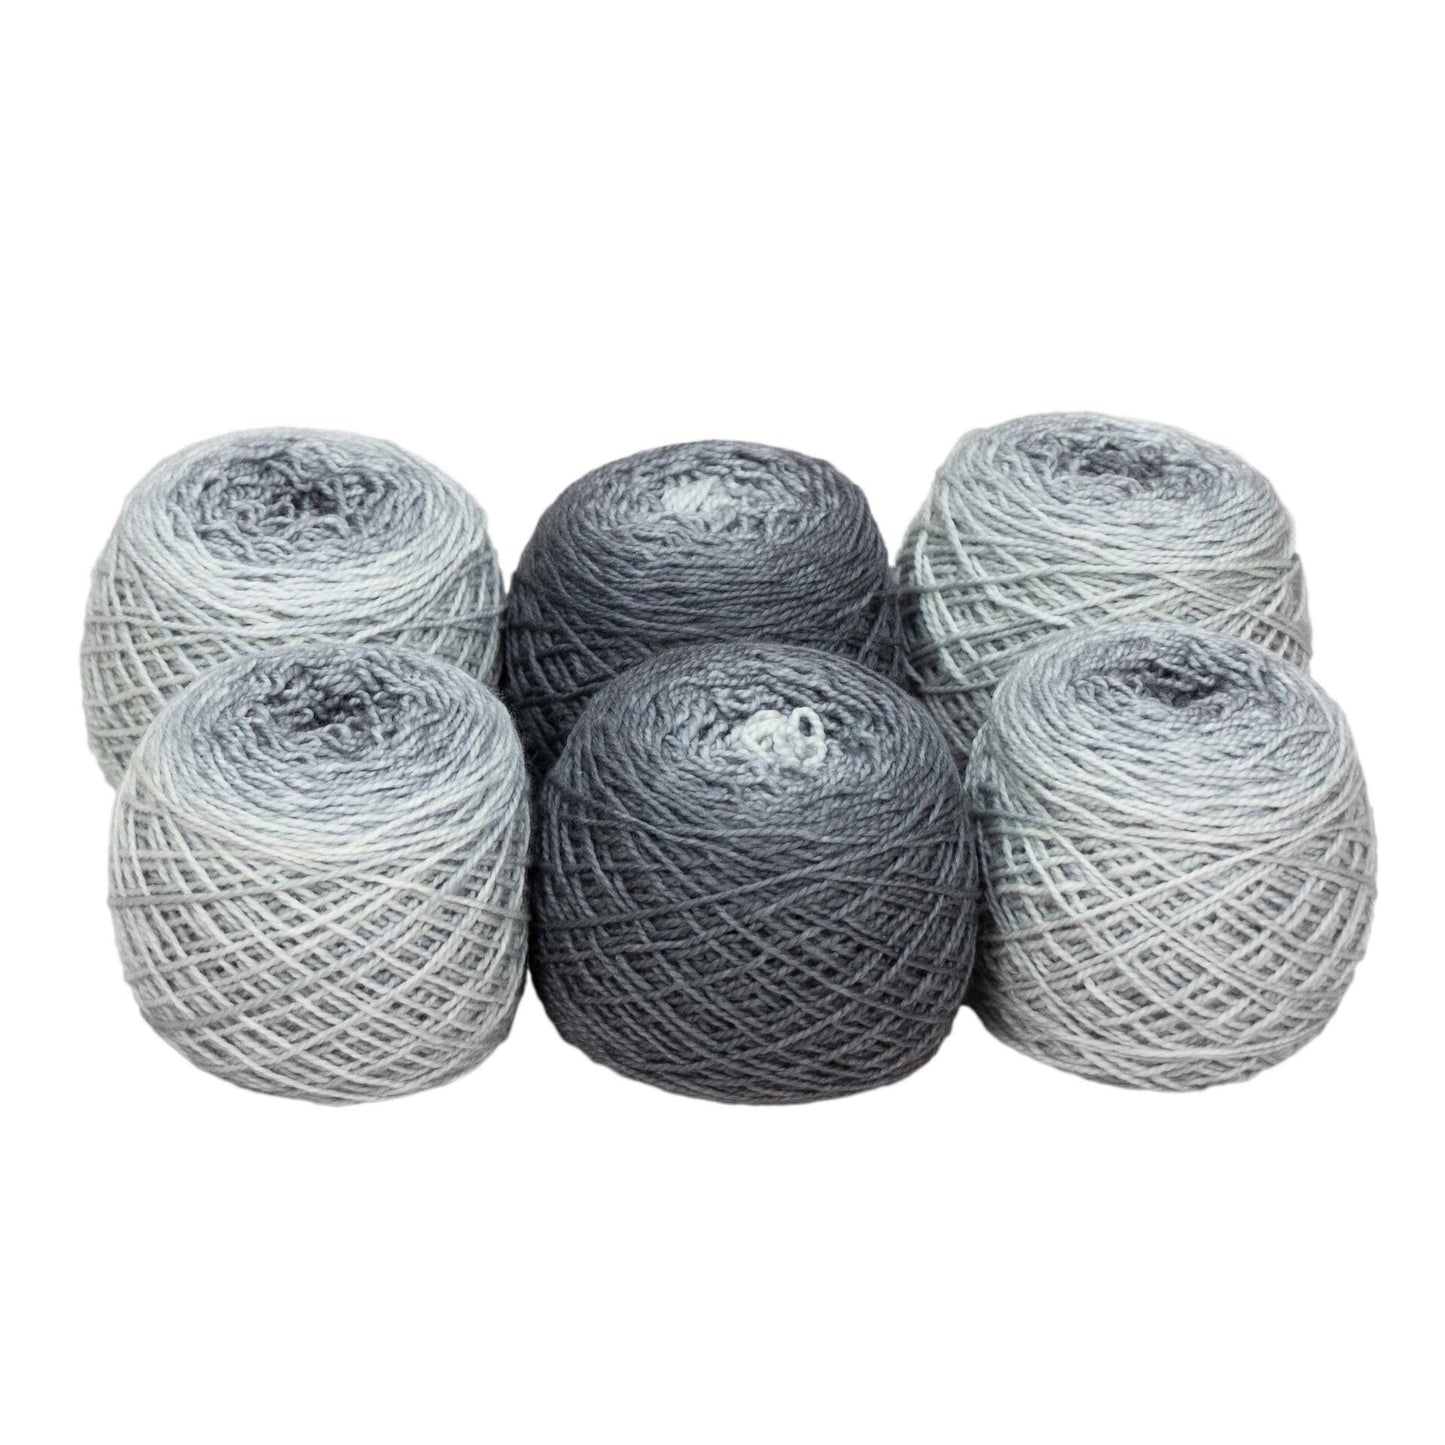 Sock Twins " Crone " - Lleap SW Merino/Nylon Handpainted Gradient Sock Yarn Set